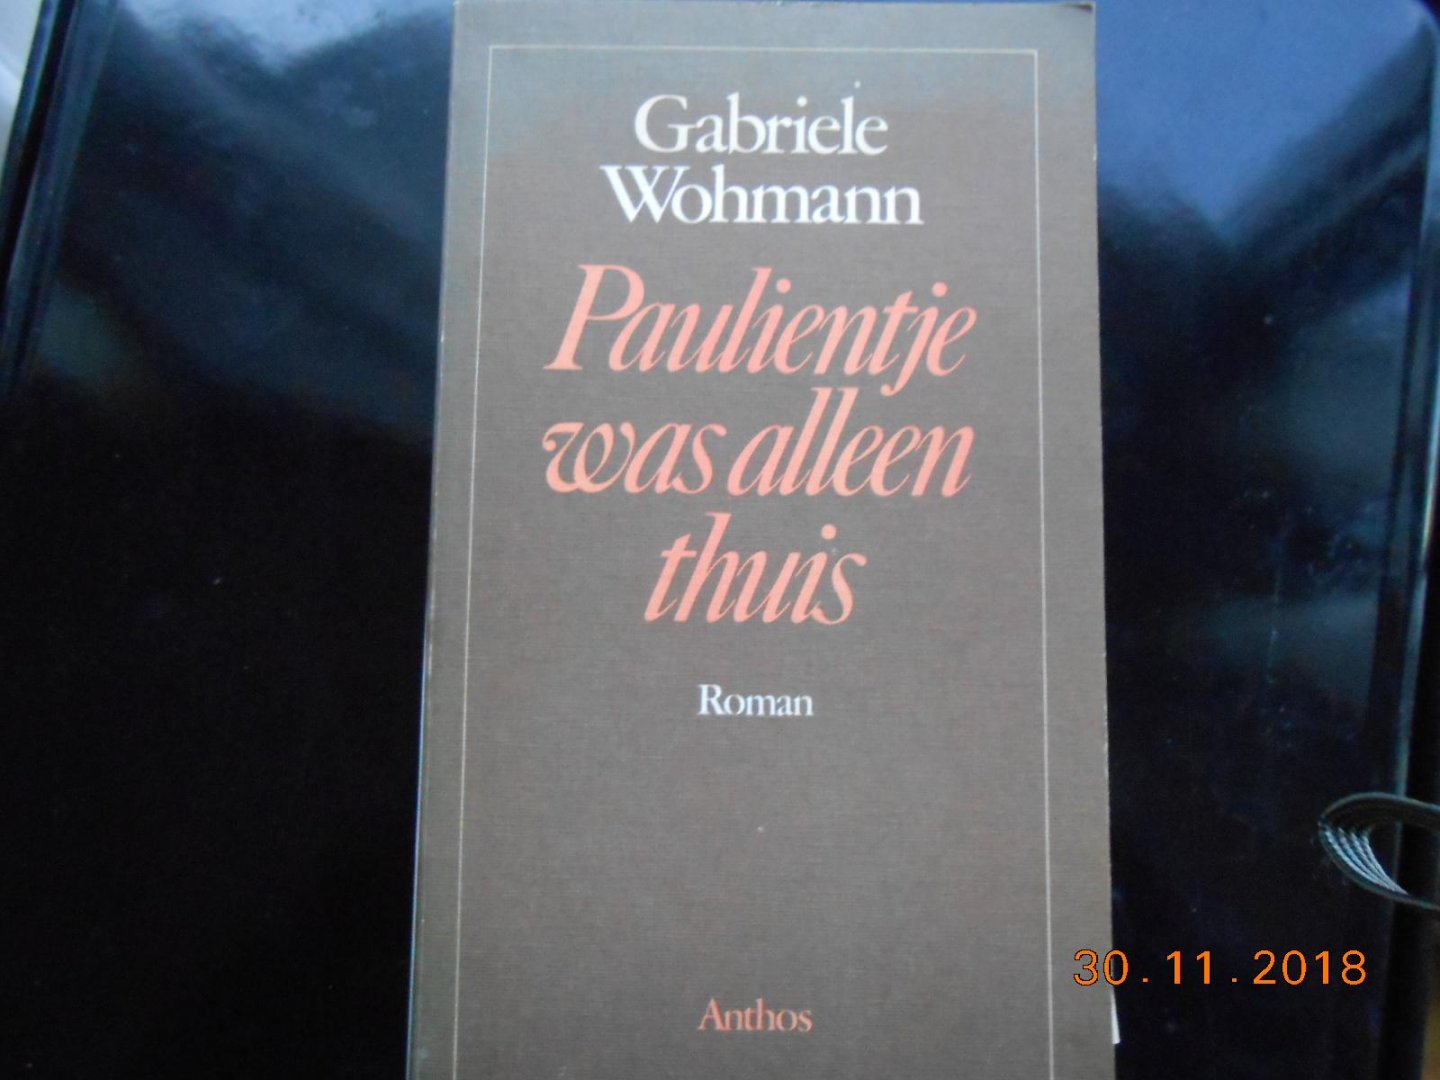 Wohmann Gabrielle - Paulientje was alleen thuis / druk 1